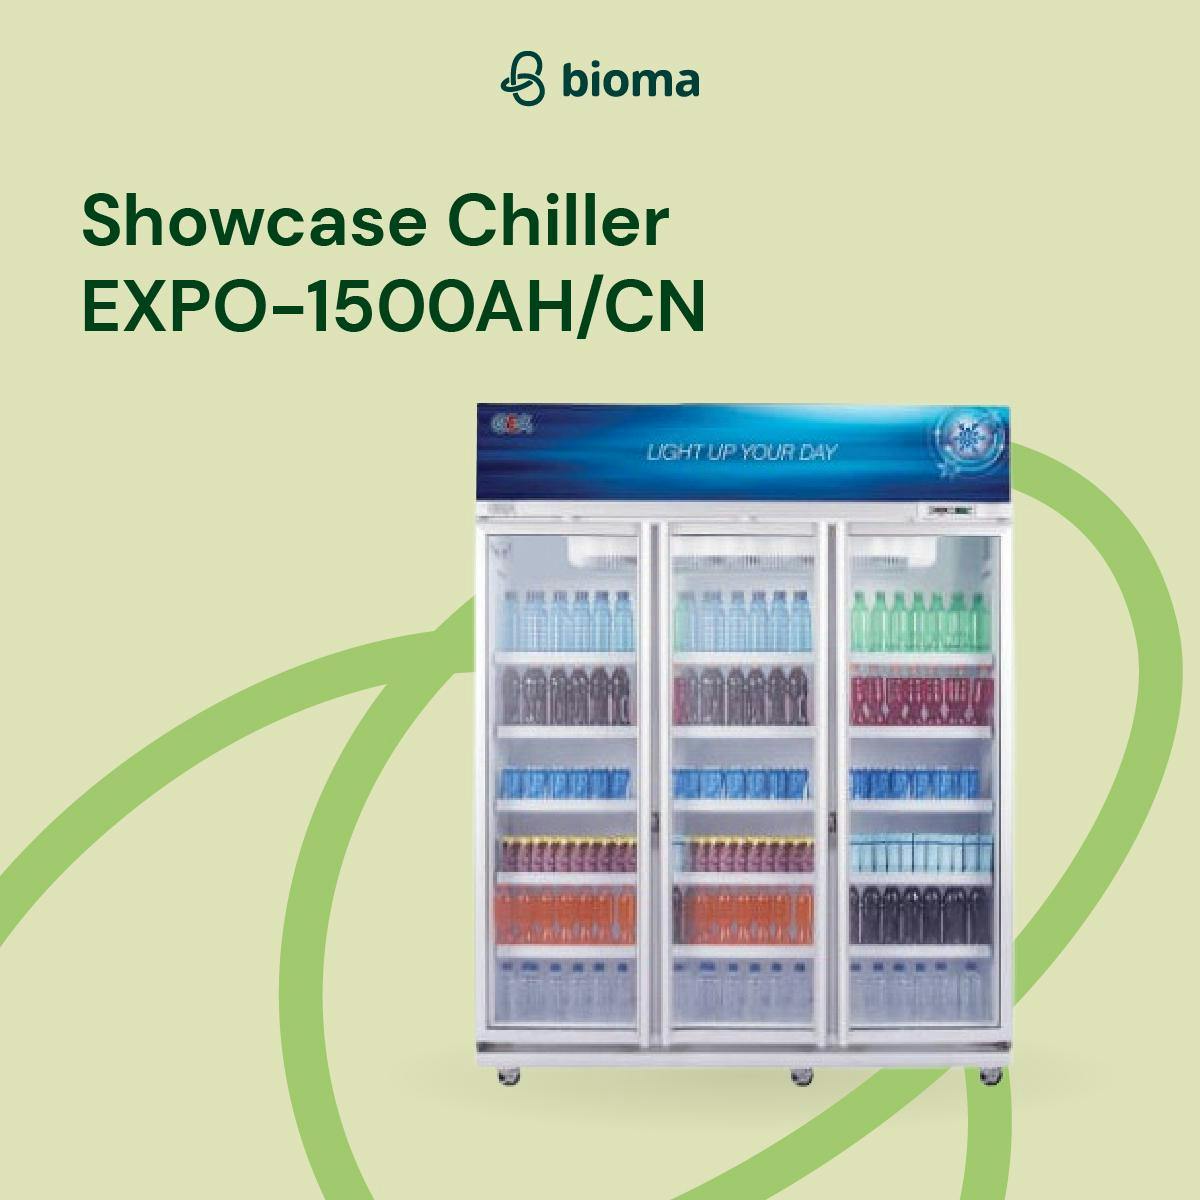 Showcase Chiller EXPO-1500AH/CN